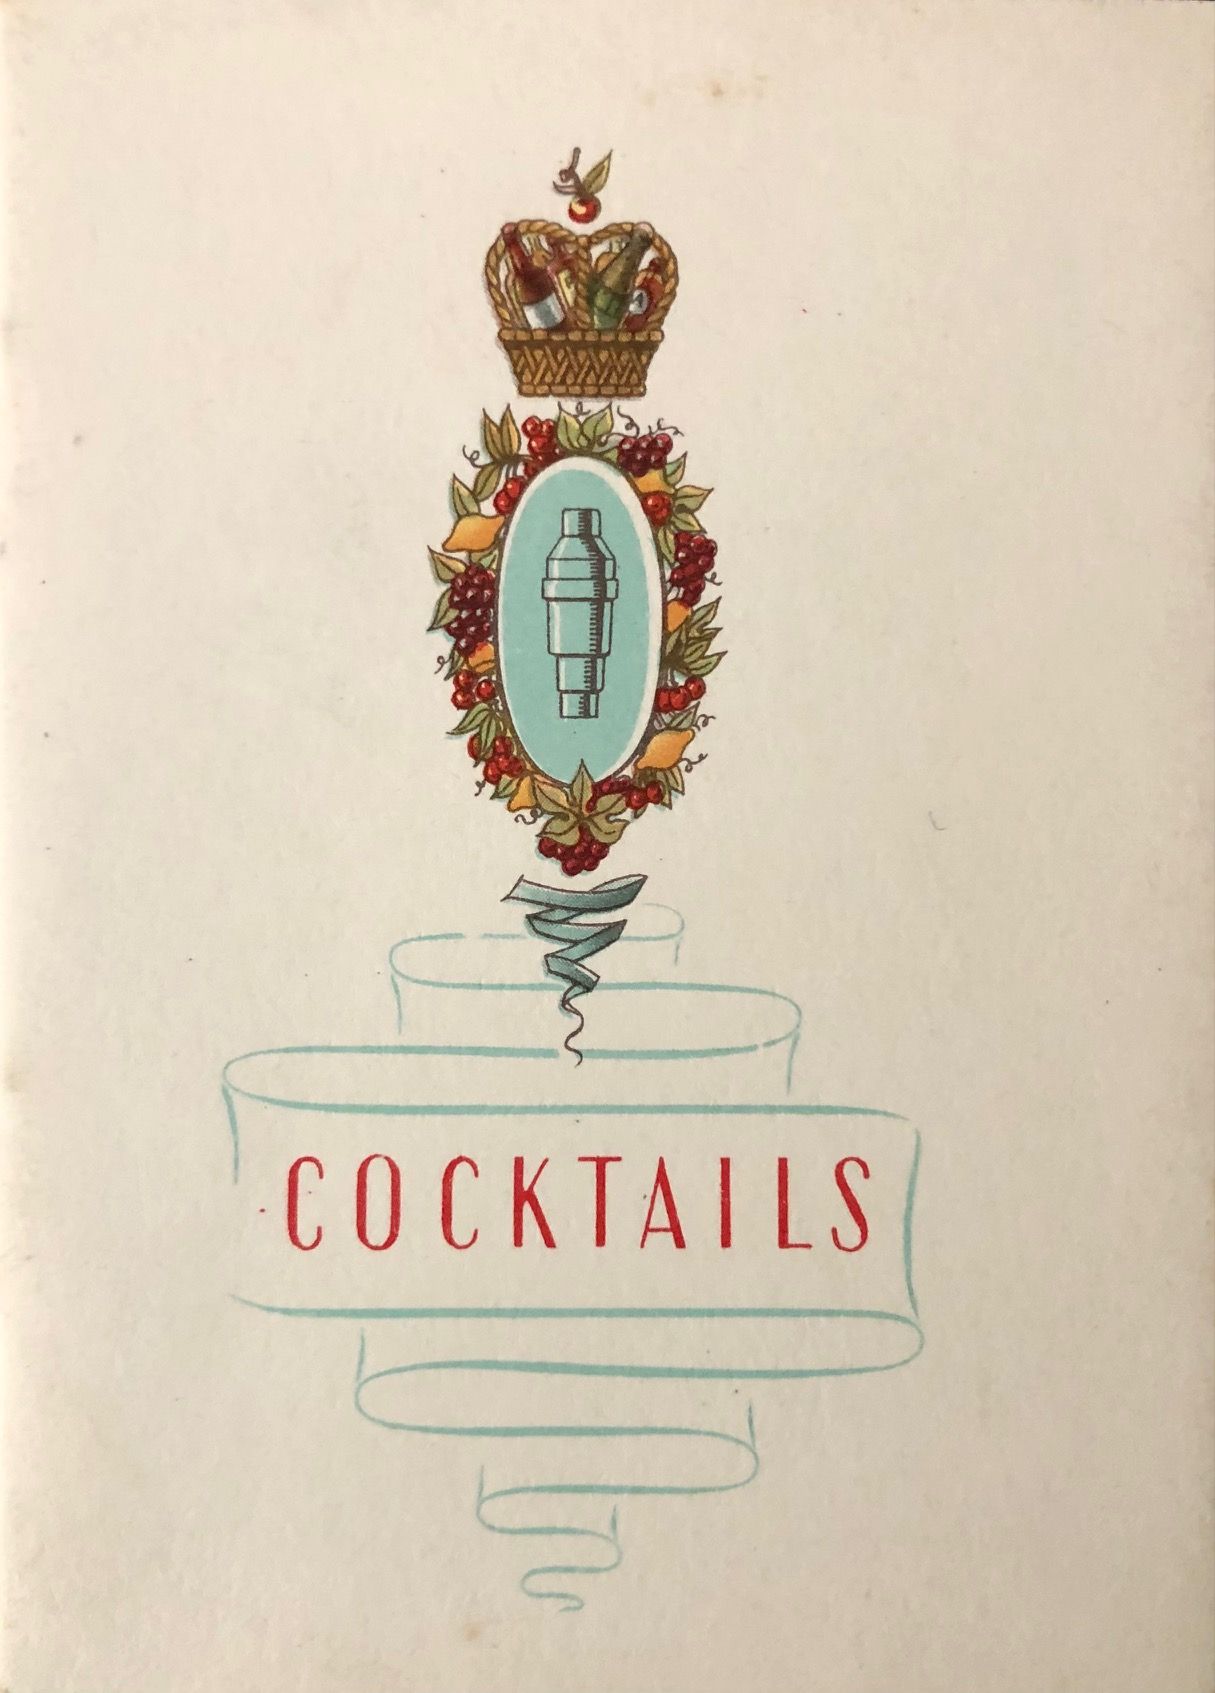 (Cocktails) Cocktails.